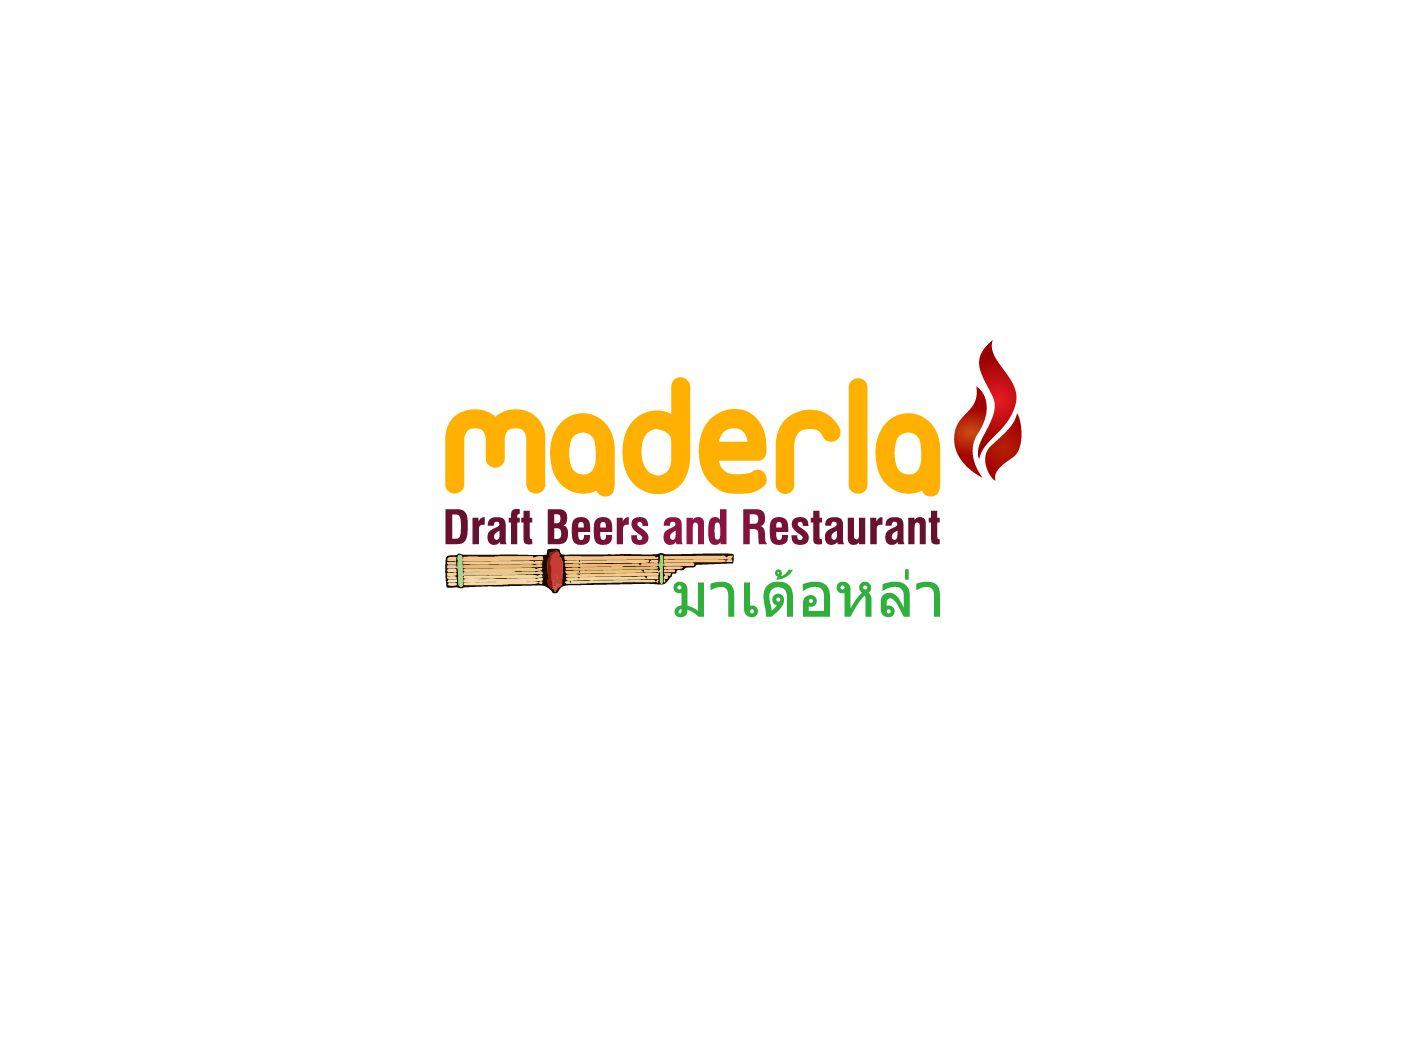 English Bar Logo - Playful, Bold, Restaurant Logo Design for Maderla and มาเด้อหล่า